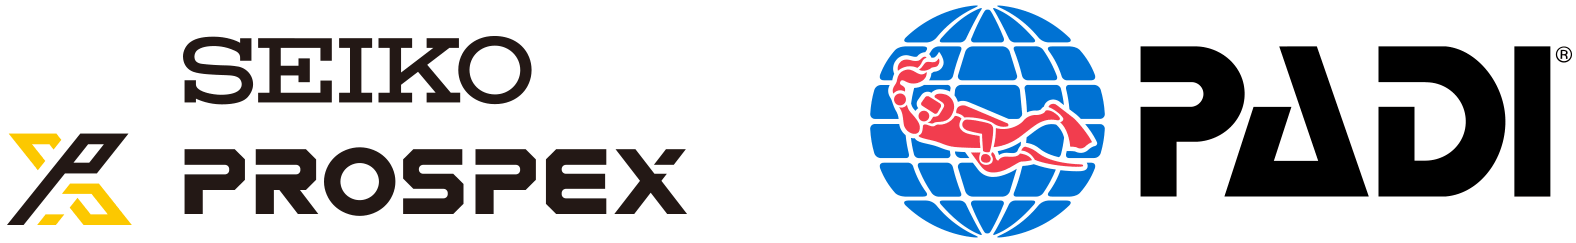 Logo of SEIKO PROSPEX & PADI®